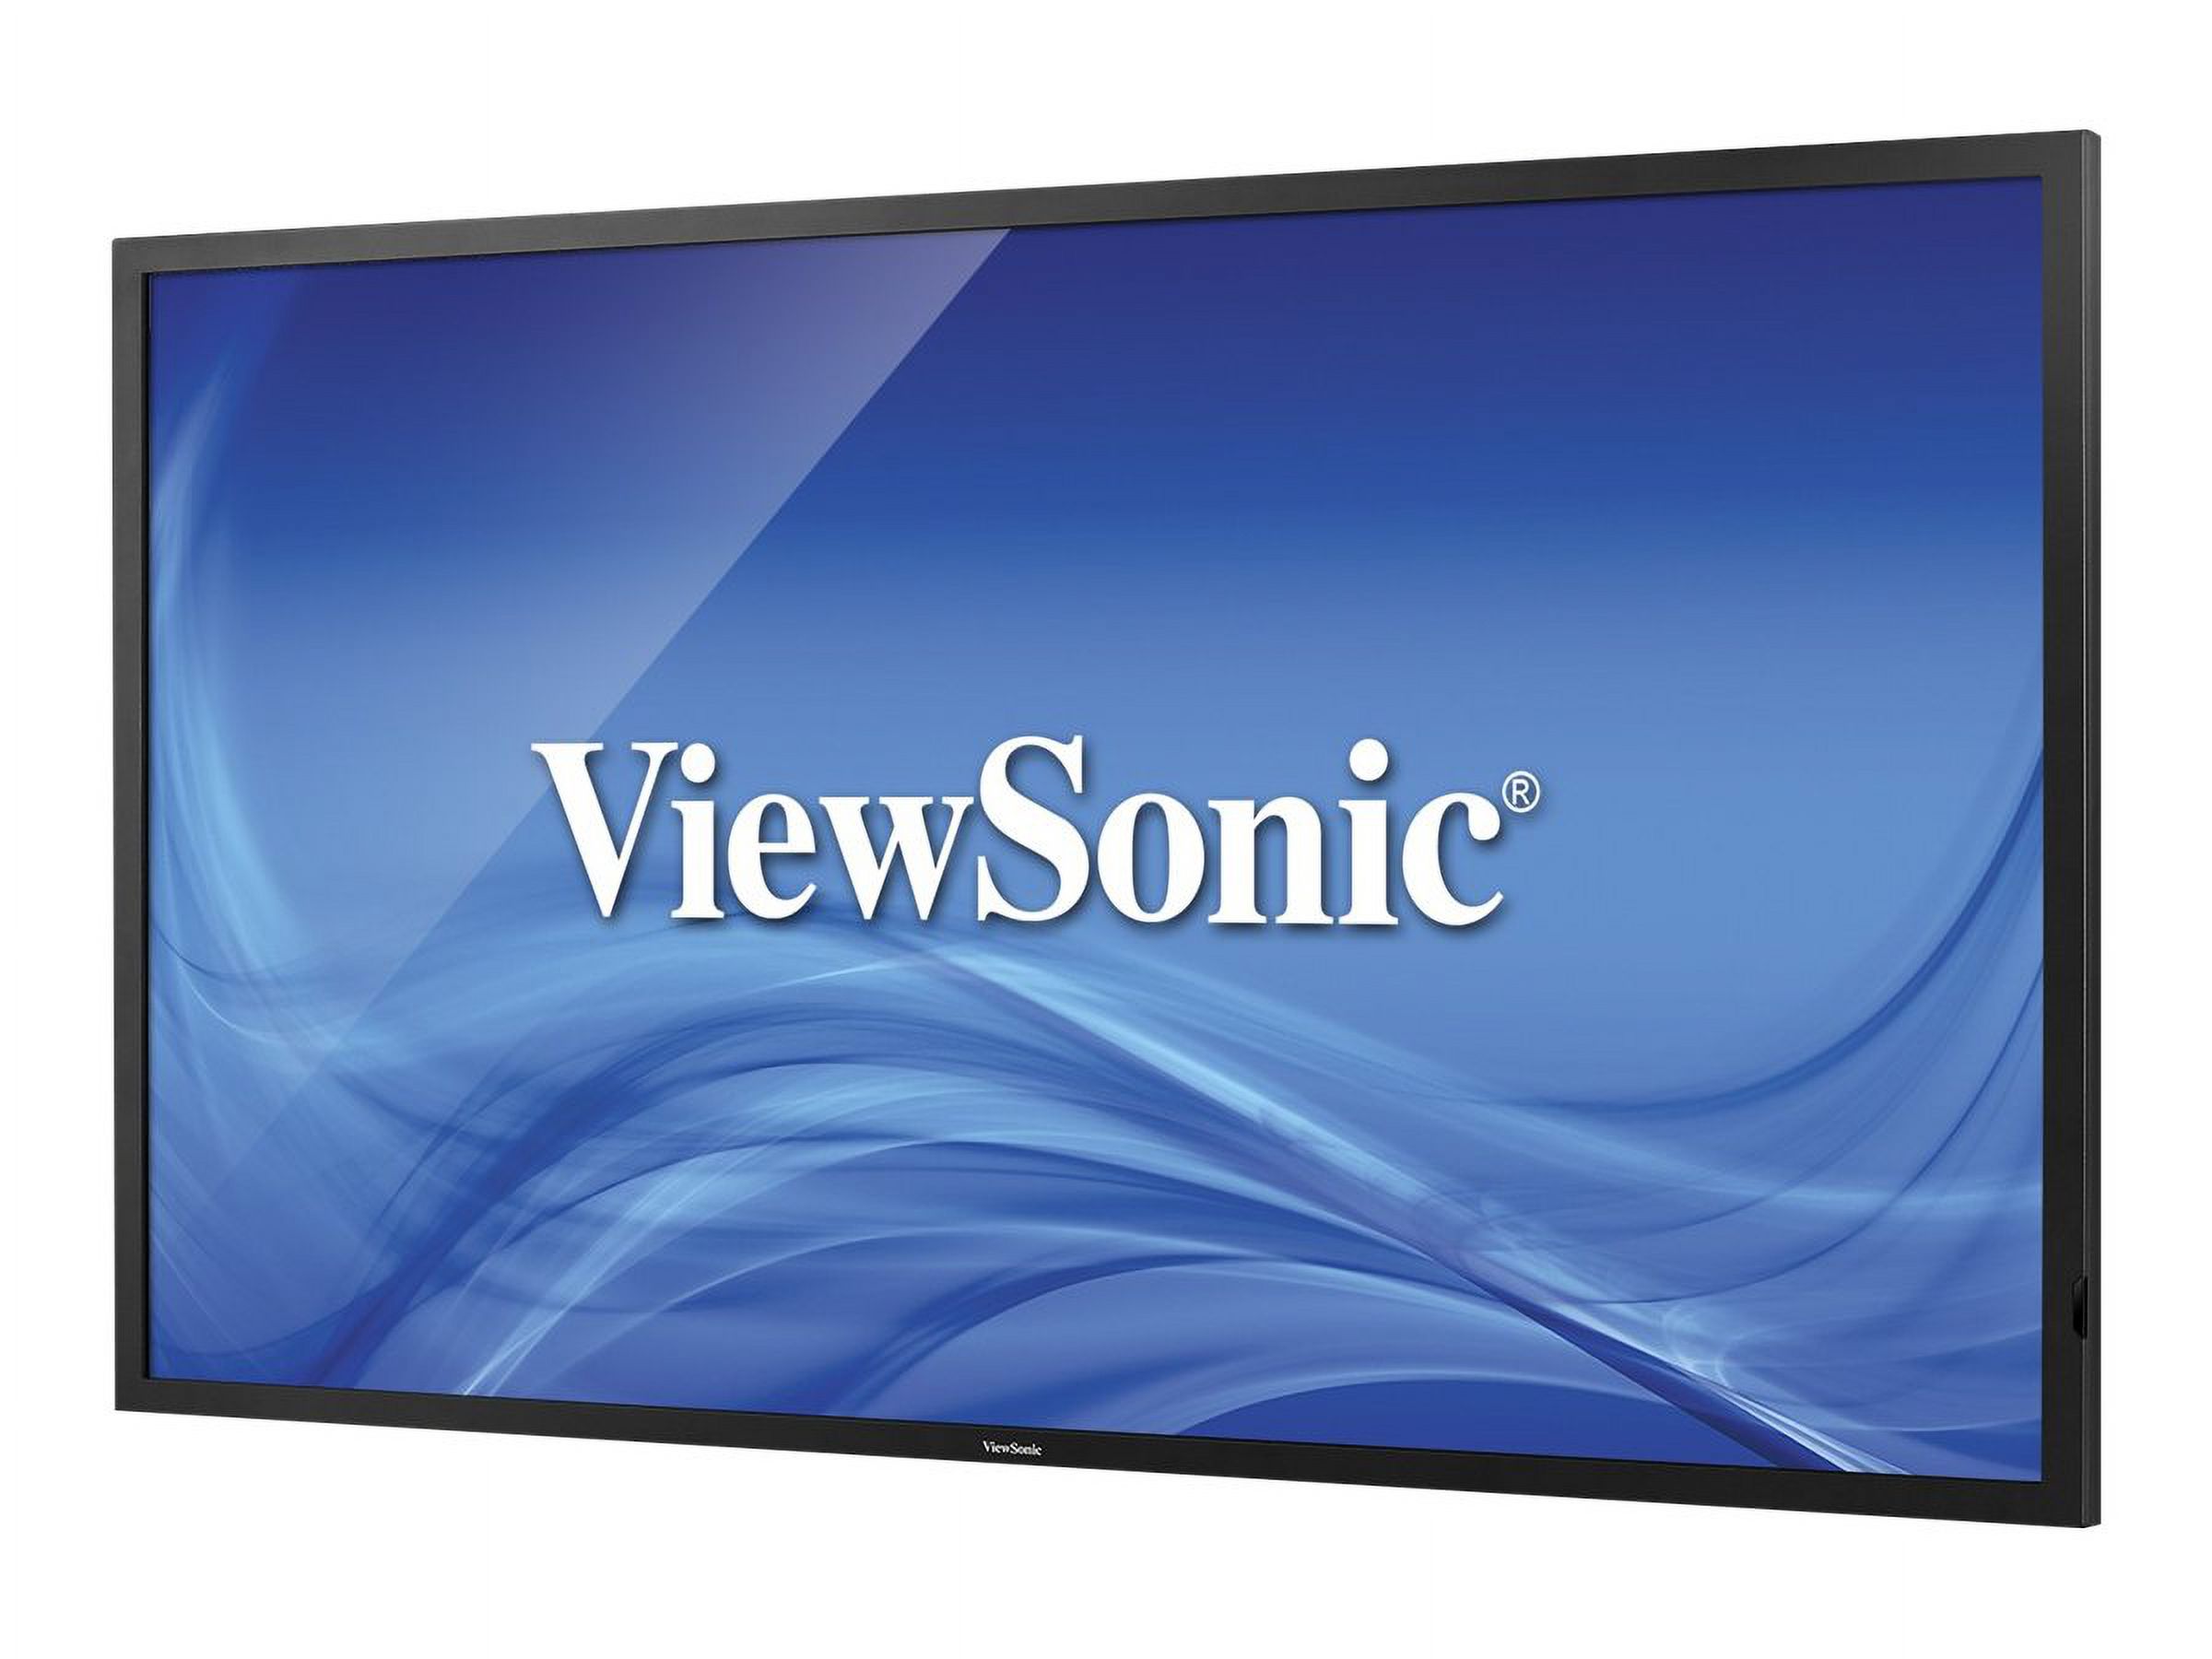 ViewSonic CDP5560-L 55" LED display - - image 2 of 9